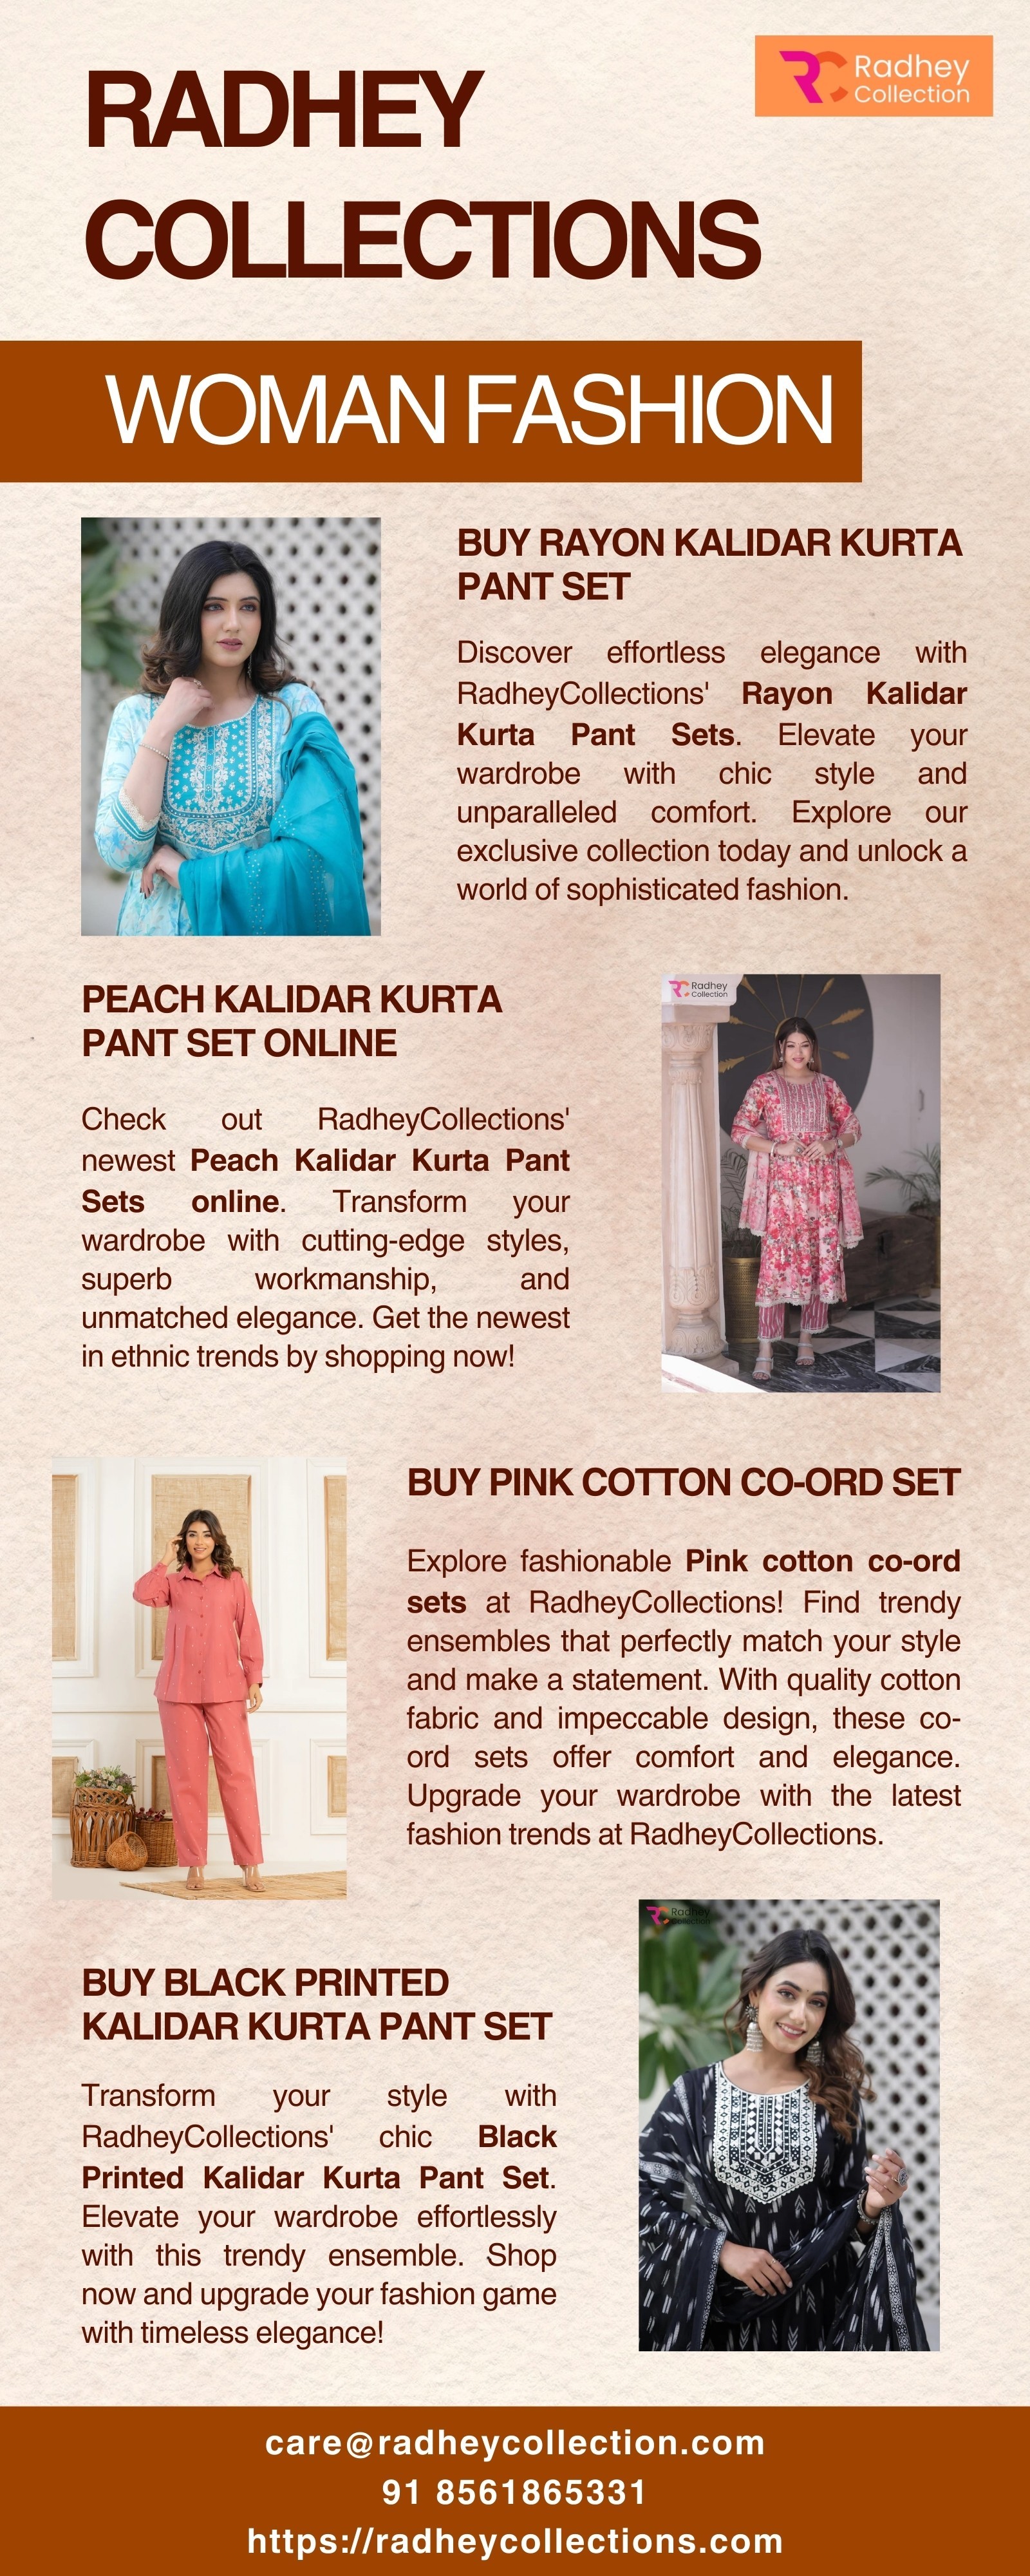 Upgrade Your Wardrobe with Trendy Black Printed Kalidar Kurta Pant Set from RadheyCollections